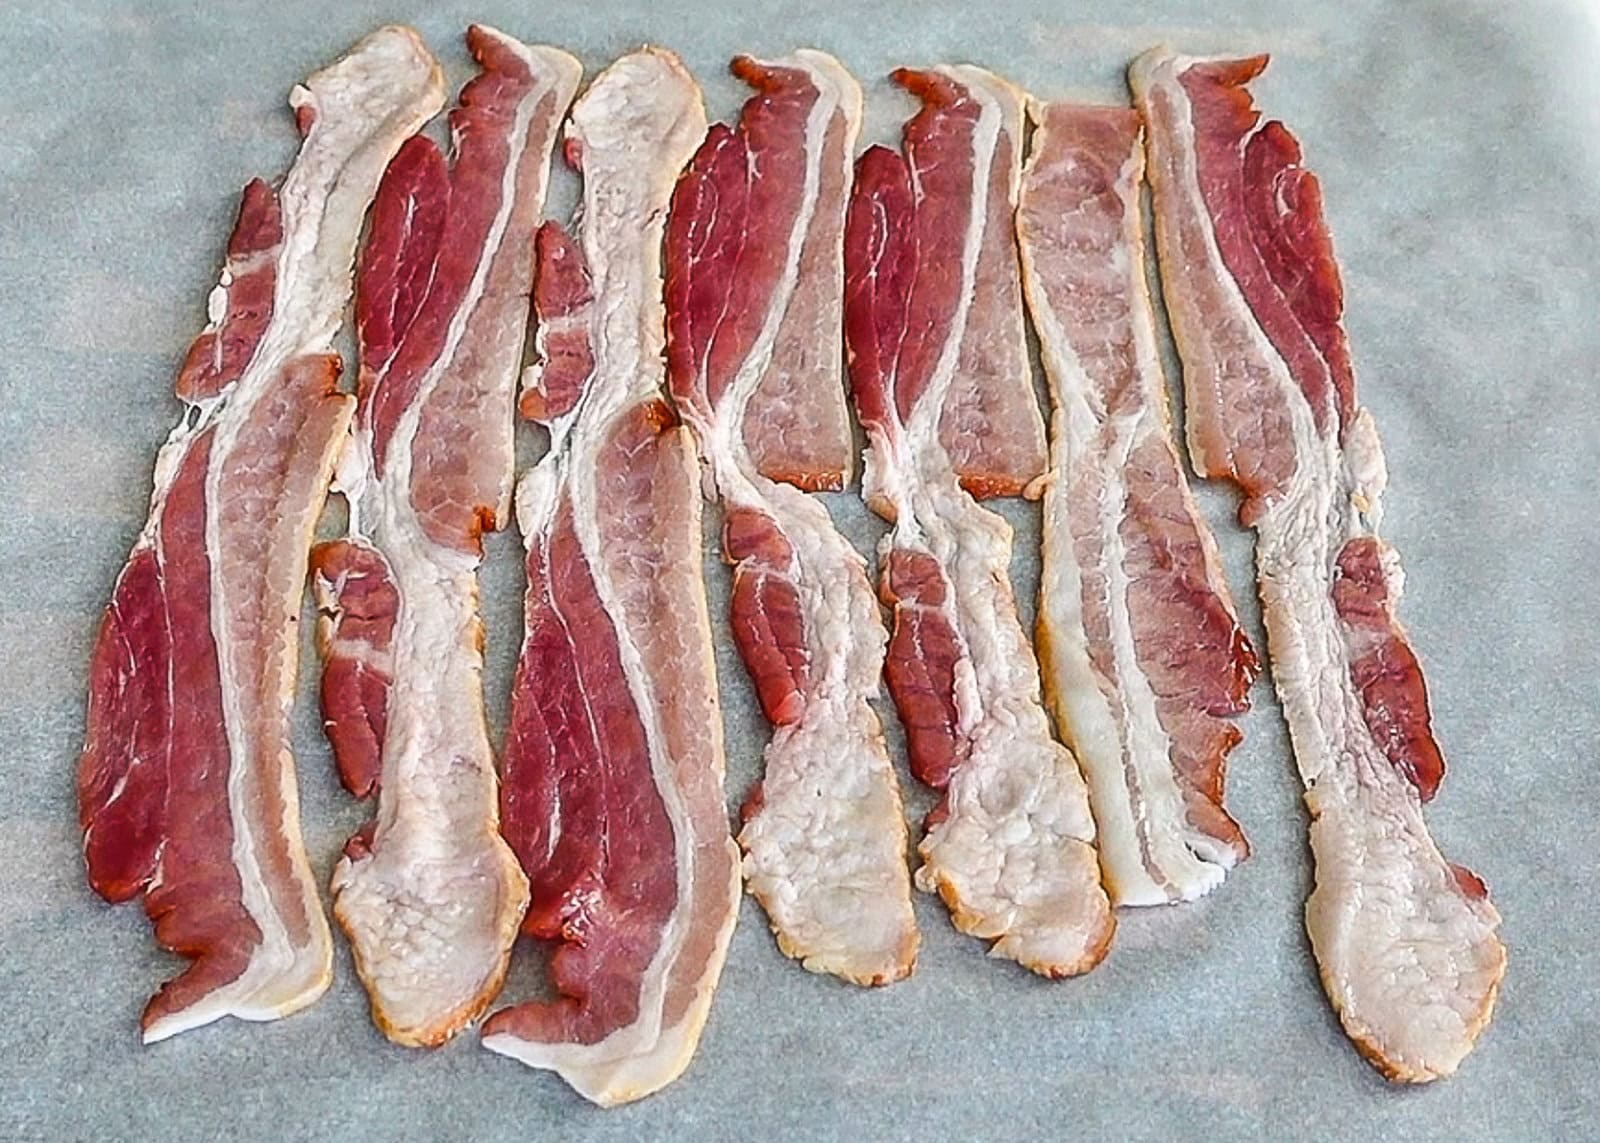 Bacon laid flat on parchment paper